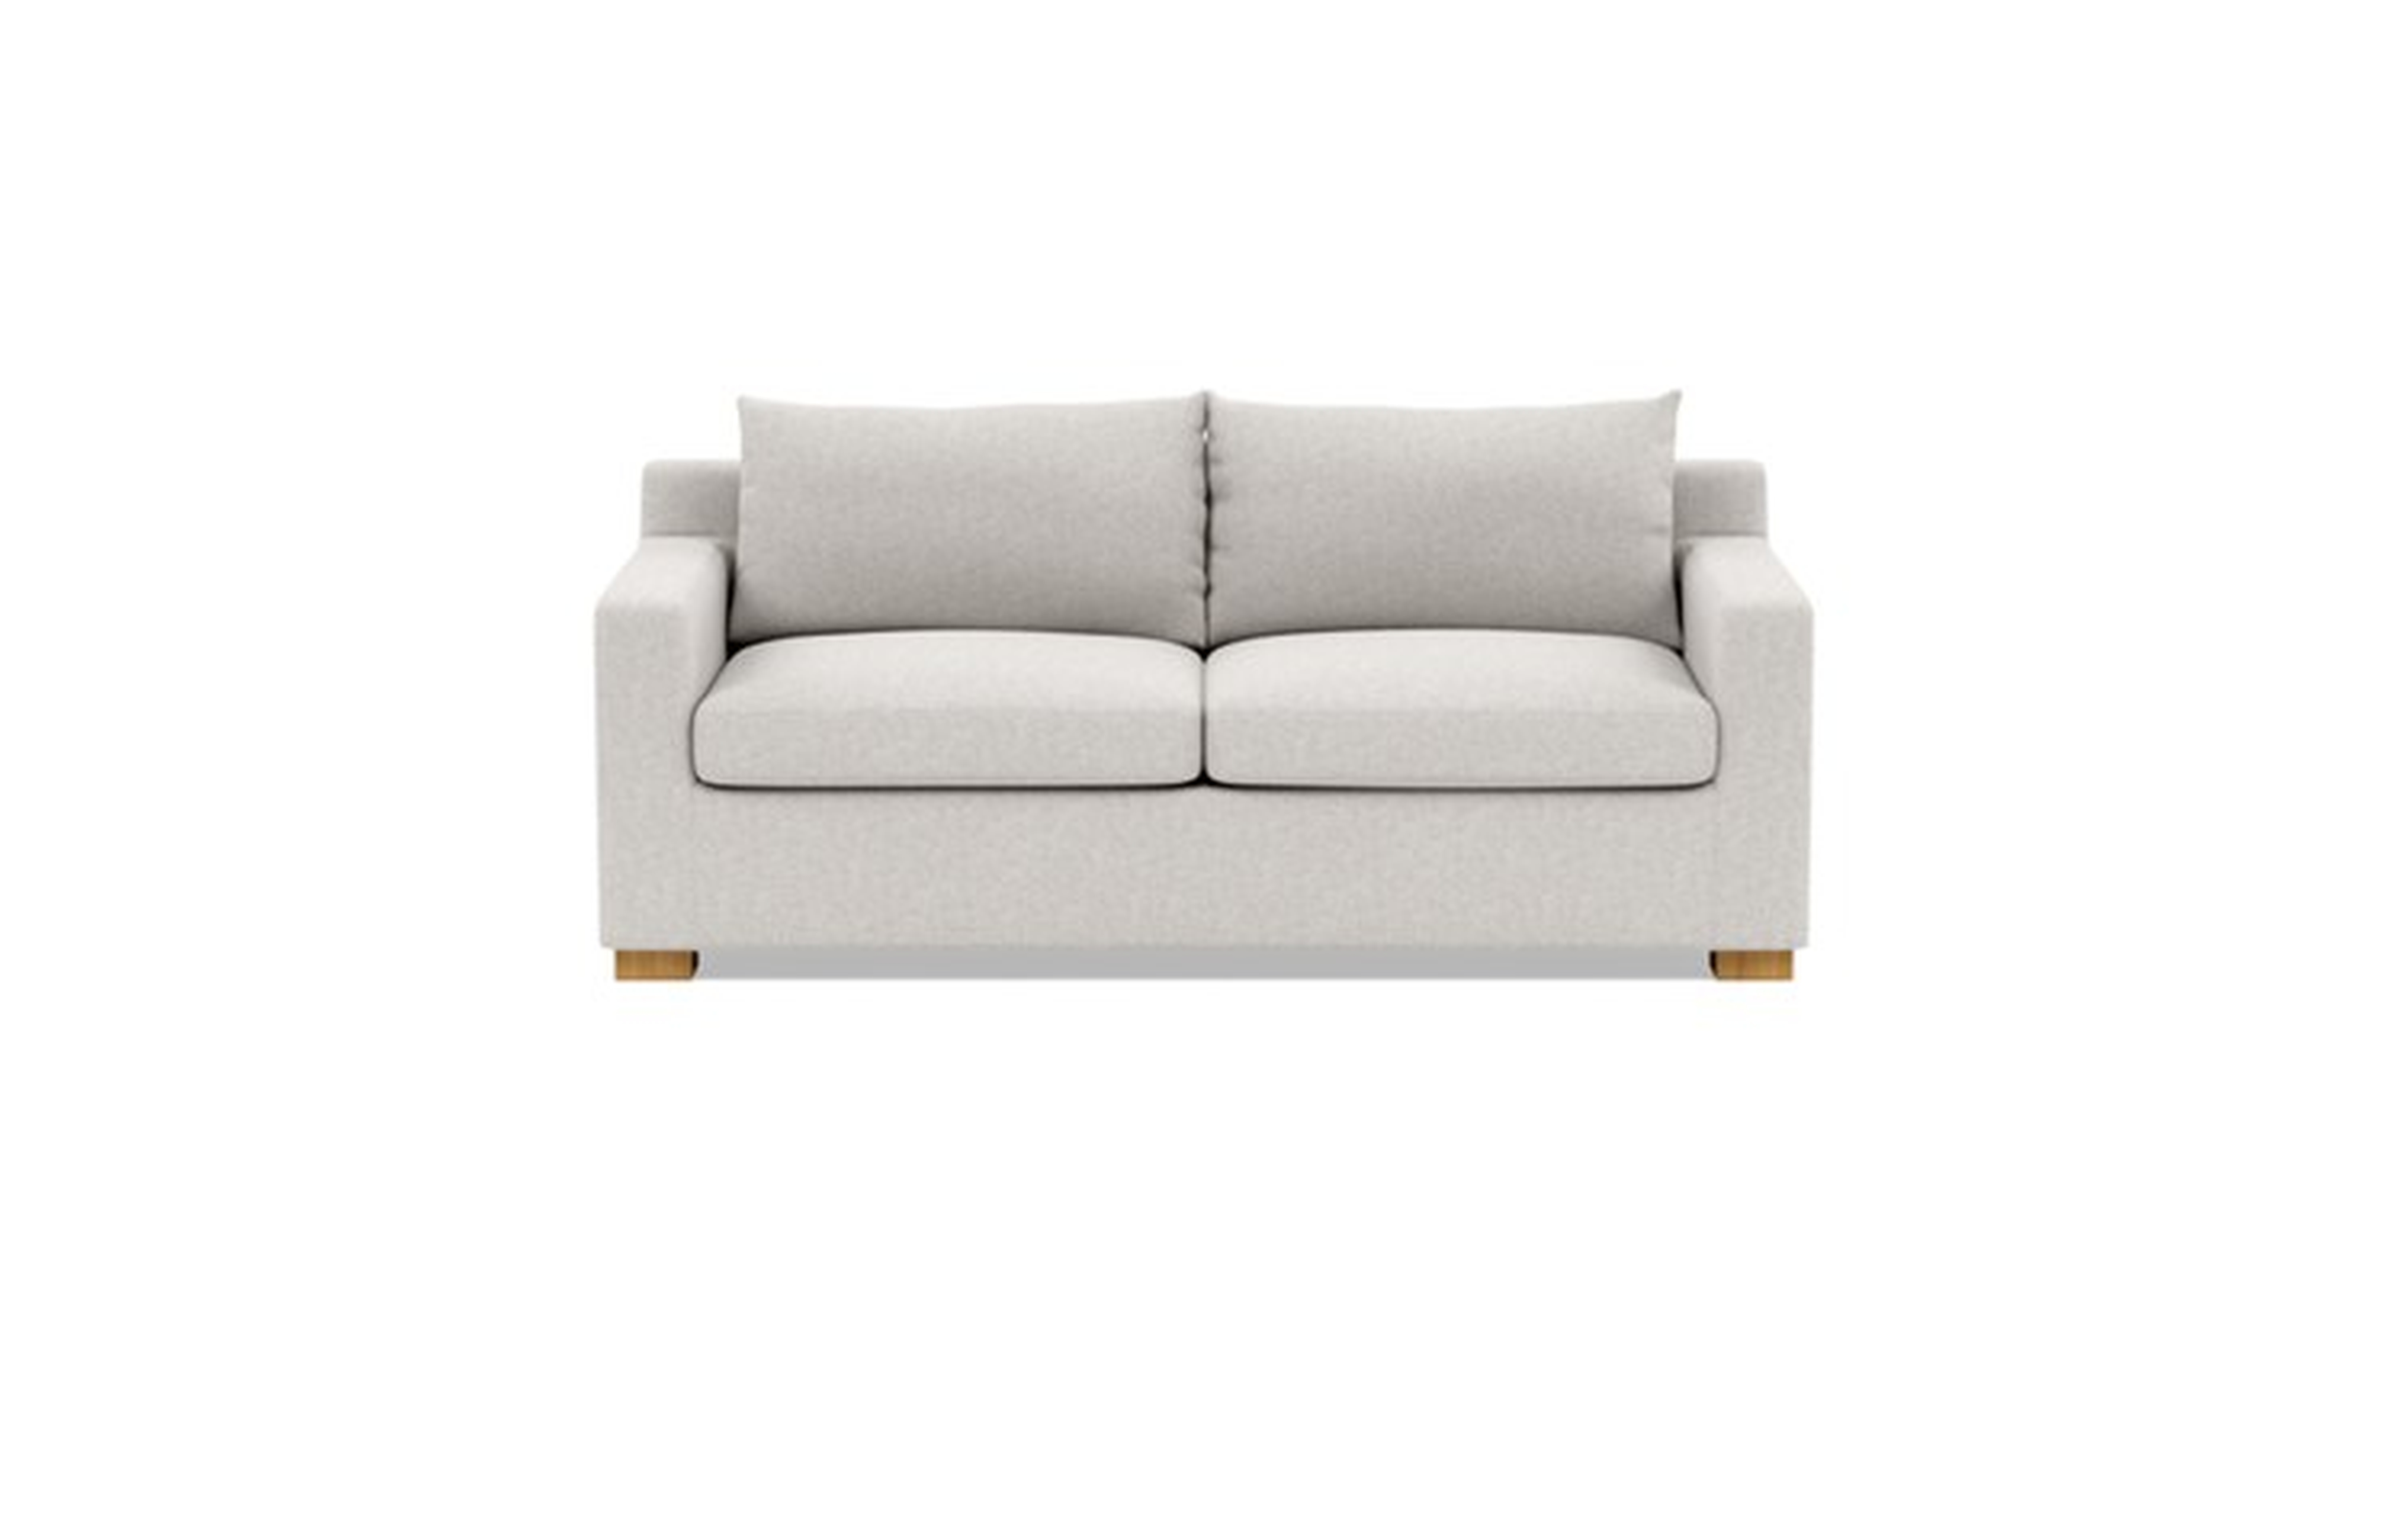 Sloan Sleeper Sleeper Sofa with Beige Pebble Fabric, standard down blend cushions, and Natural Oak legs - Interior Define